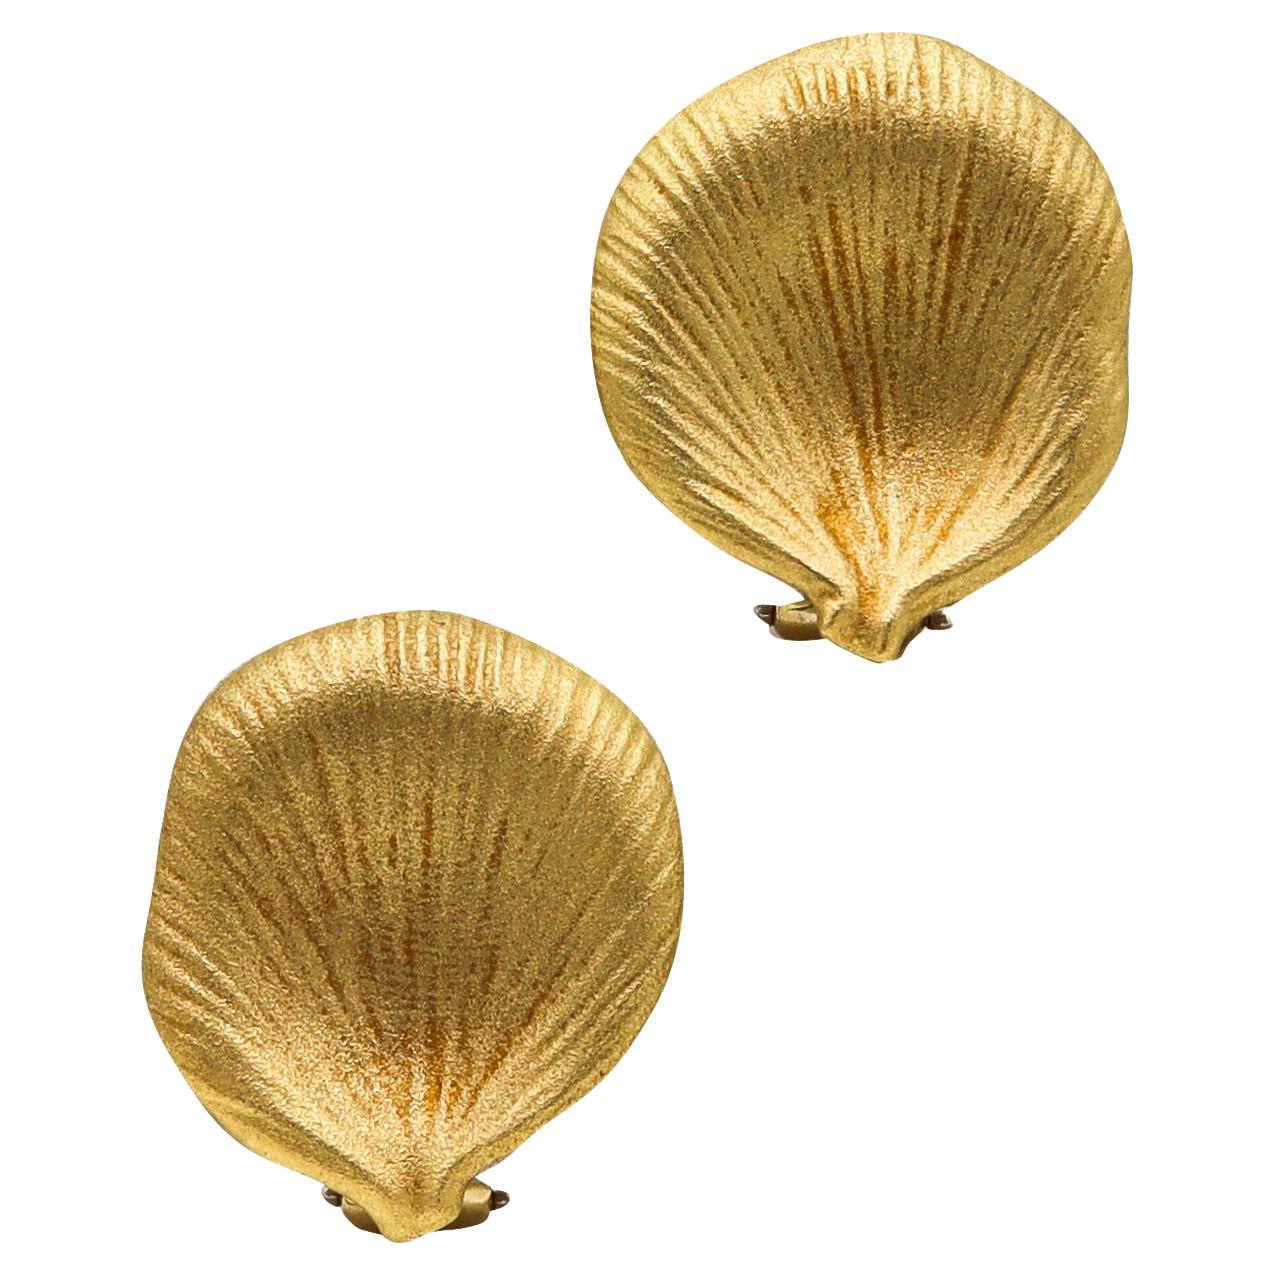 Angela Cummings Studio 1993 Textured Petals Earrings in Solid 18kt Yellow Gold